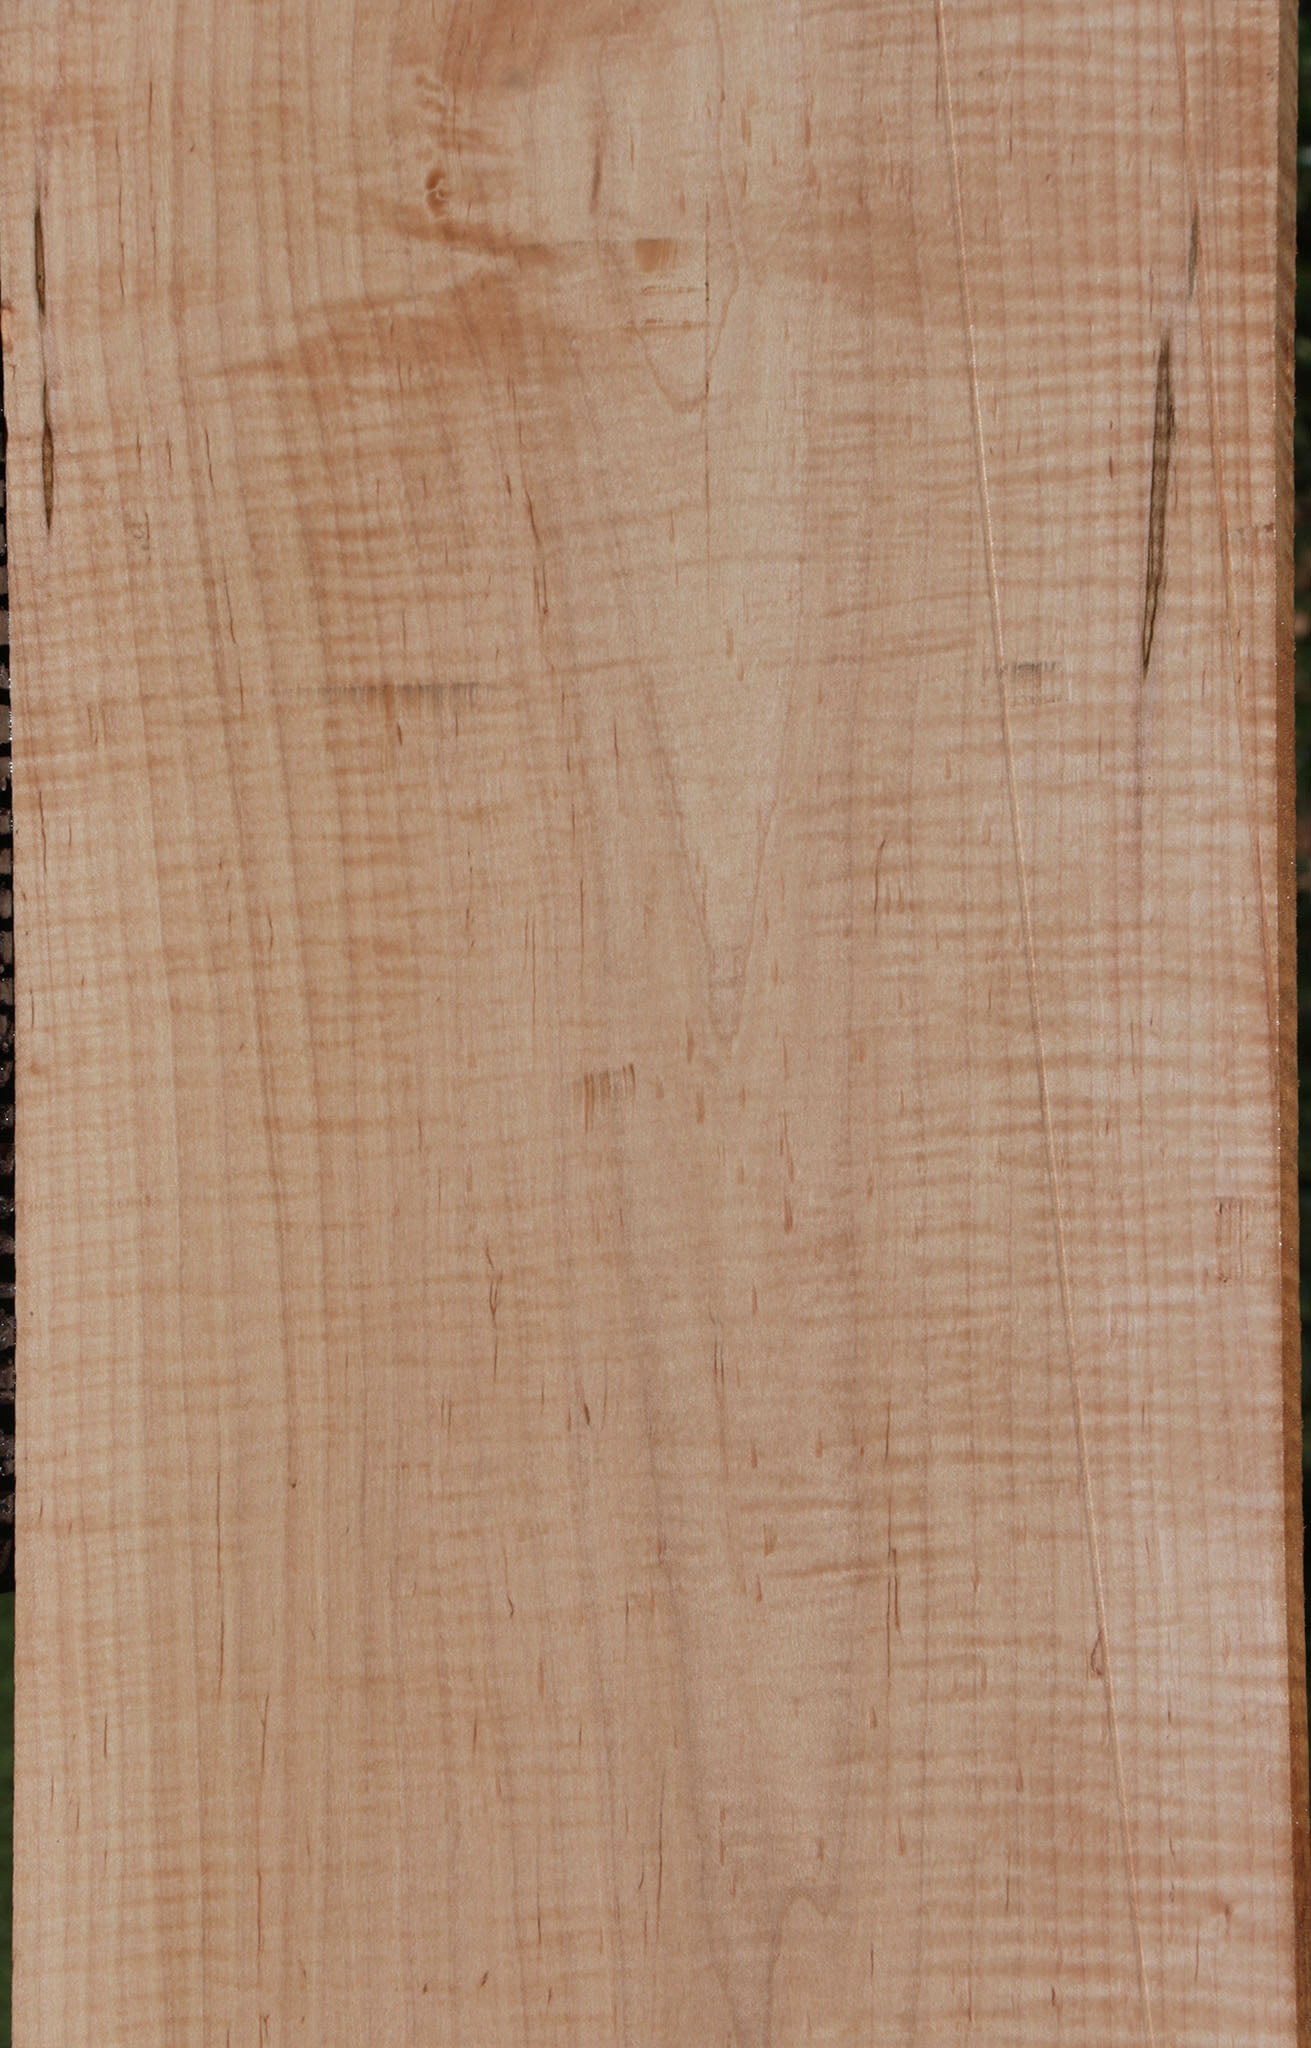 Eastern Red Maple Lumber